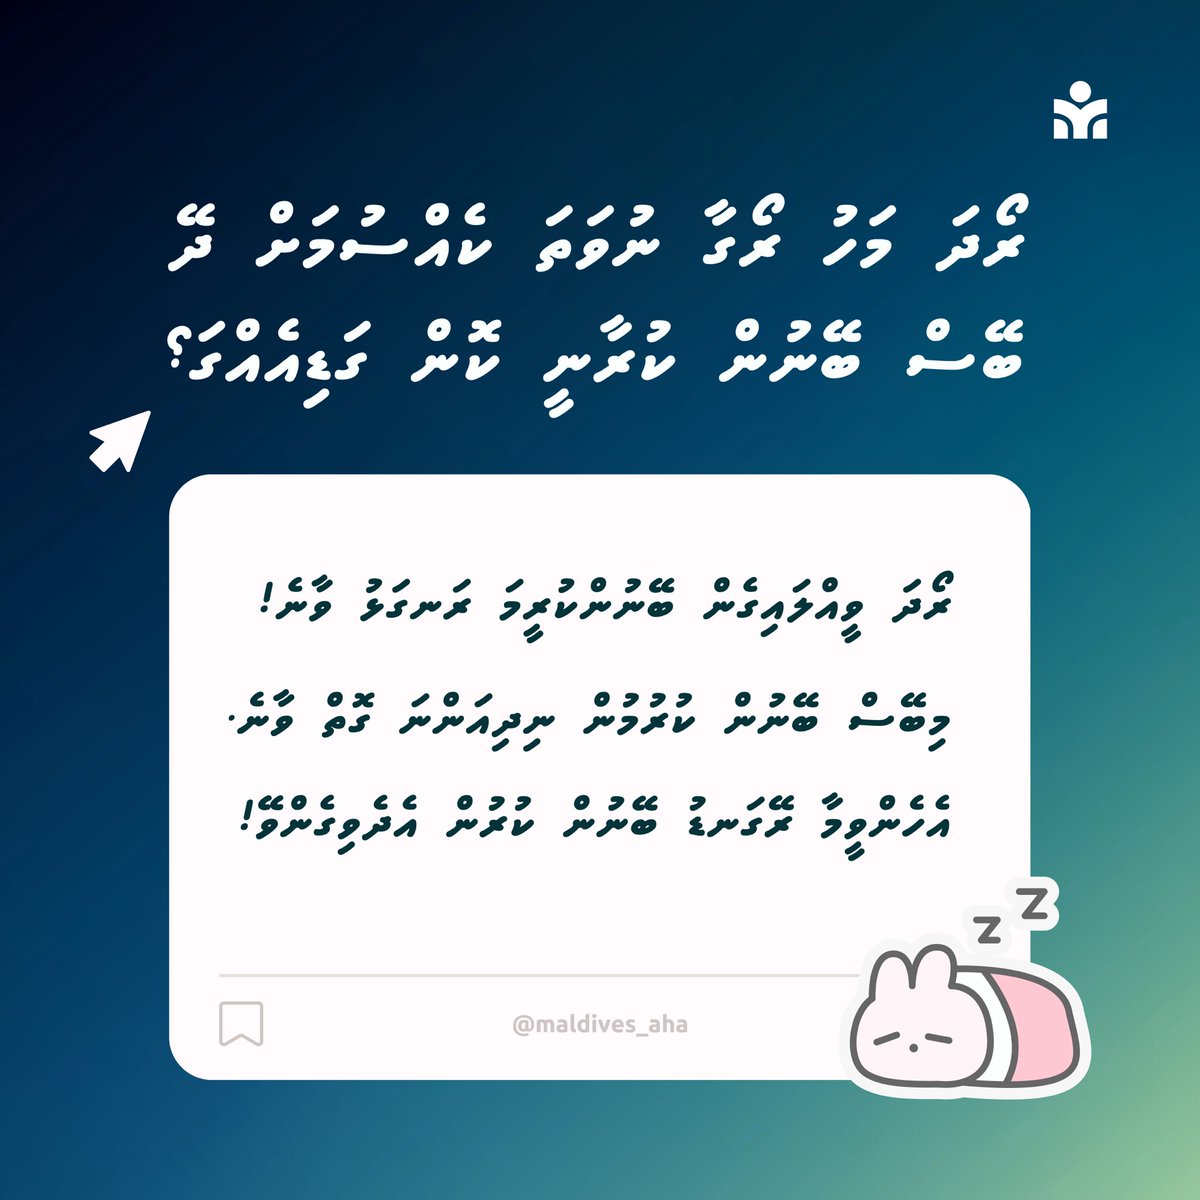 Maldives Association for Health and Awareness (@maldives_aha) on Twitter photo 2024-03-23 18:22:09